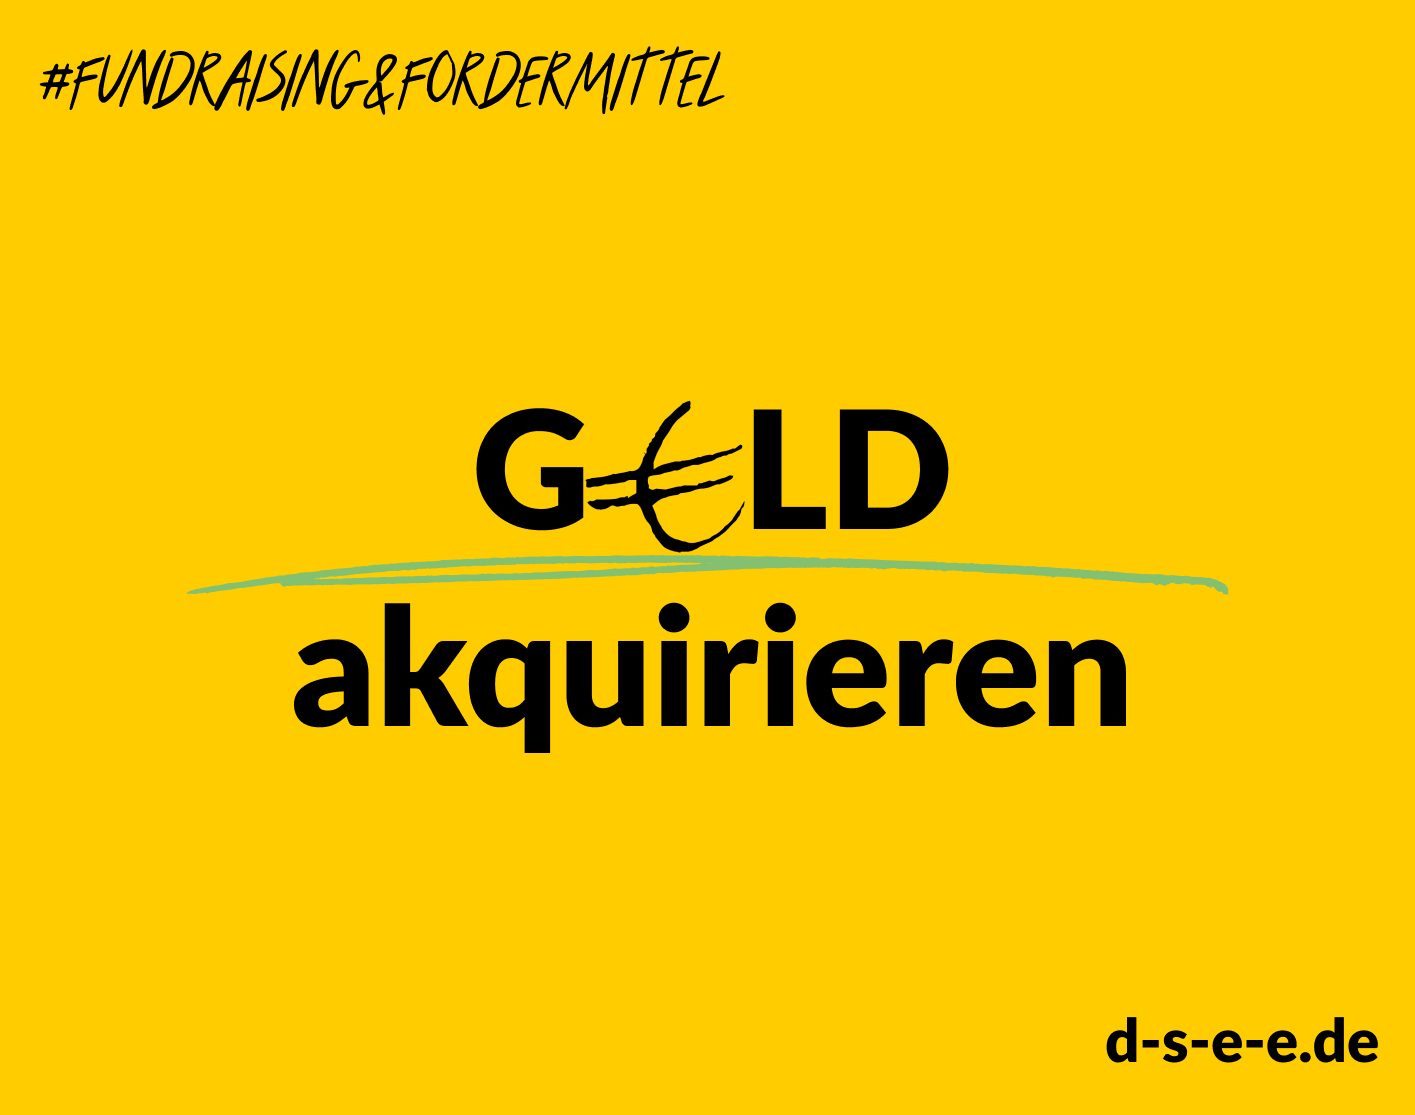 Grafik mit gelbem Hintergrund. Text: #Fundraising & Fördermittel. Geld akquirieren. d-s-e-e.de